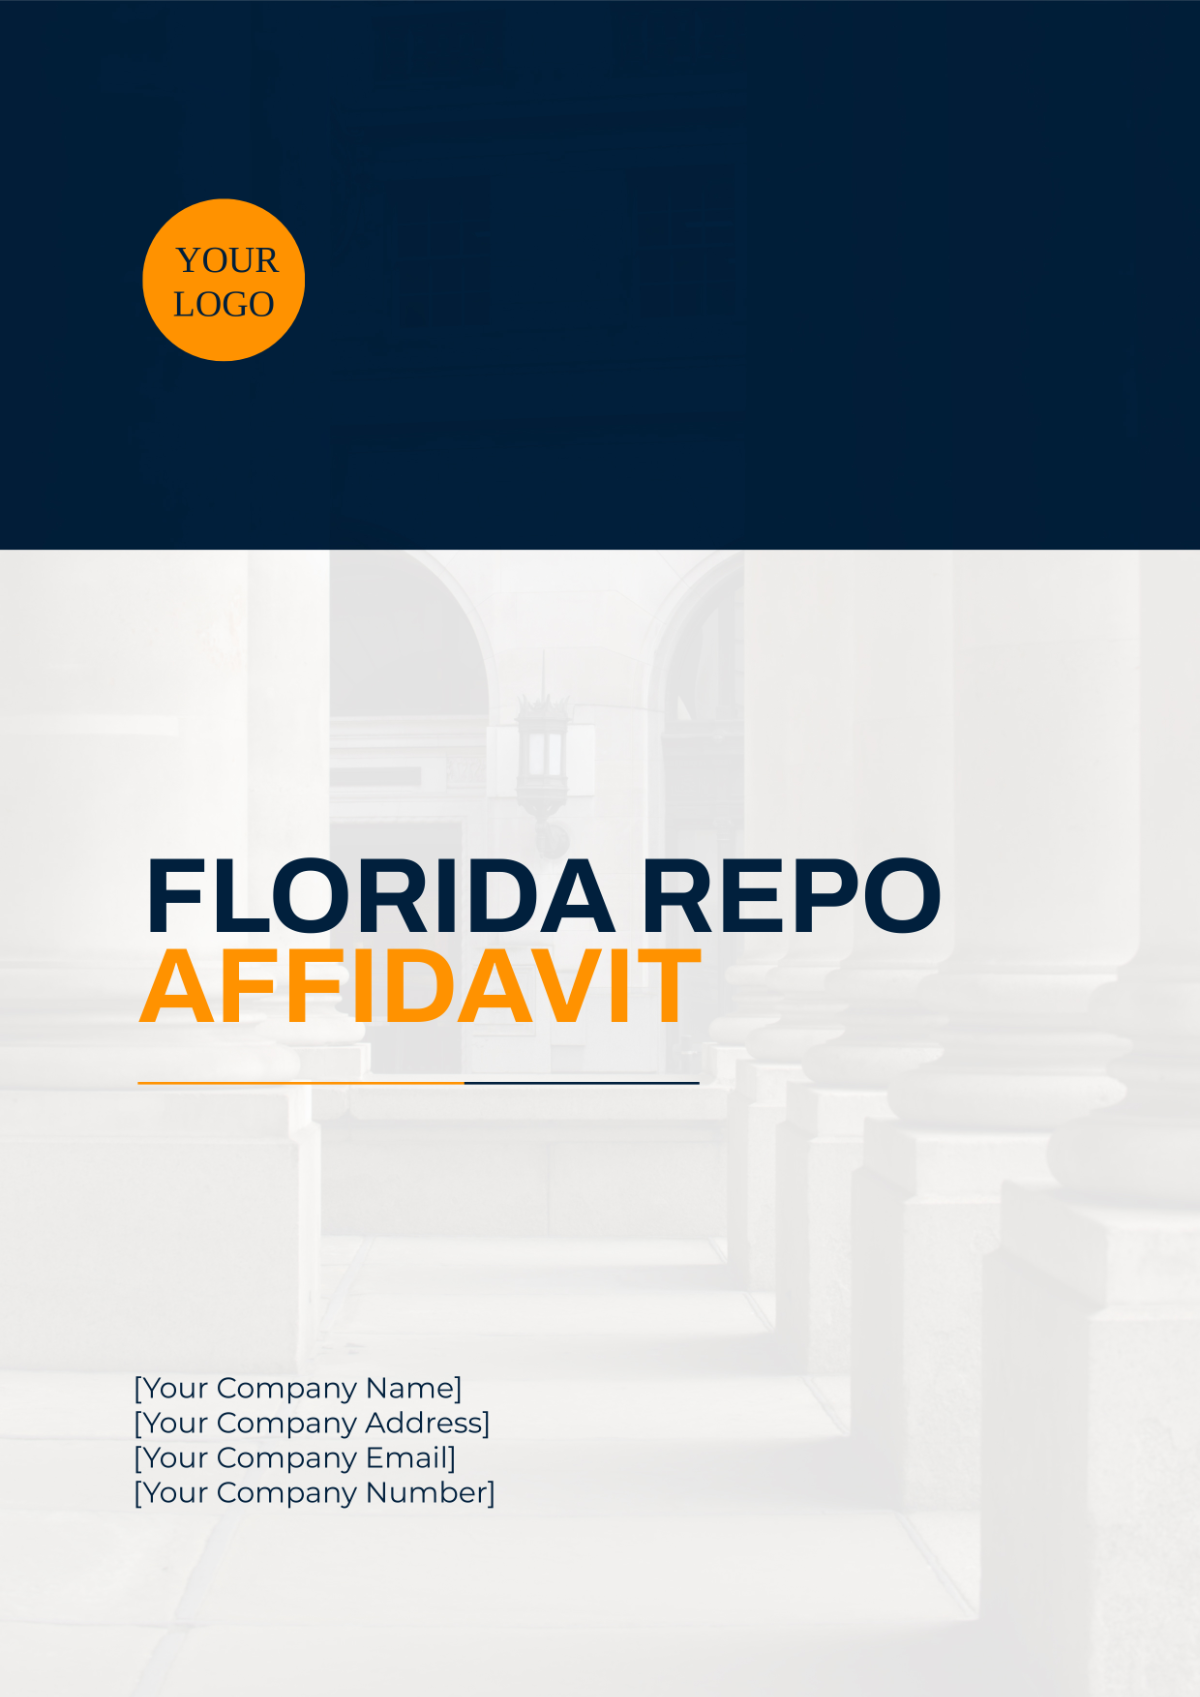 Florida Repo Affidavit Cover Page